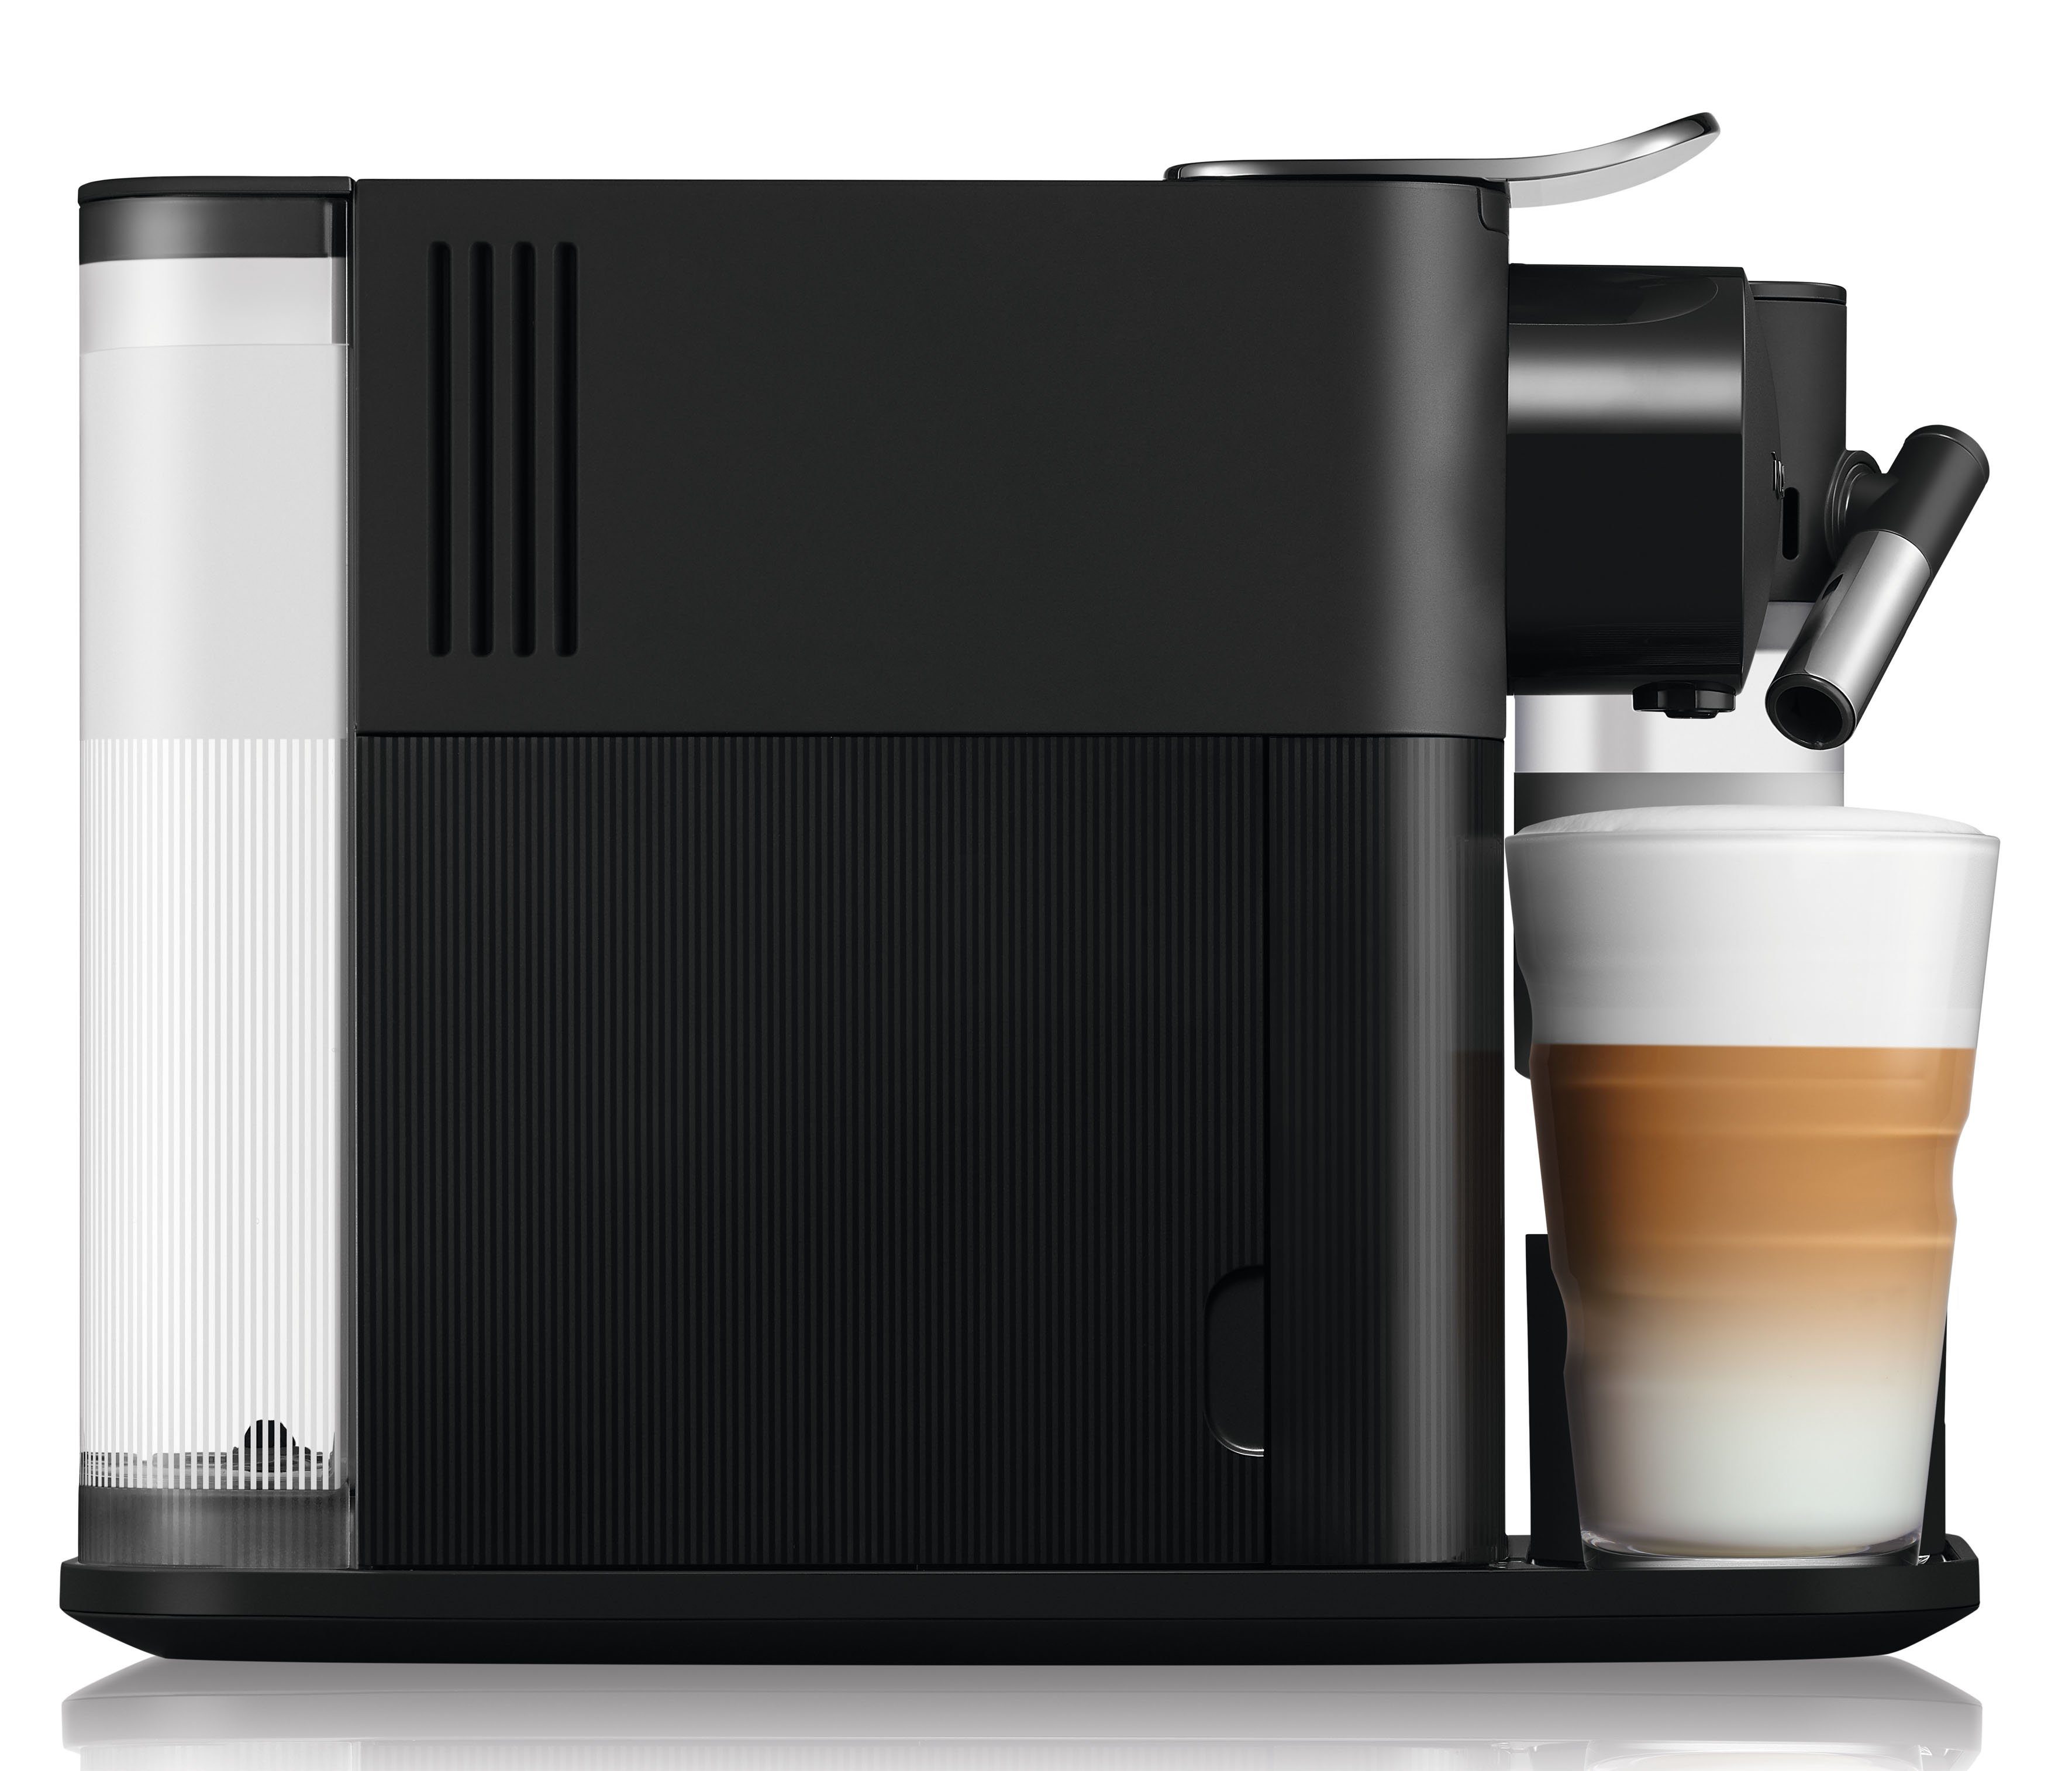 Nespresso Kapselmaschine EN510.B Willkommenspaket 7 Kapseln inkl. DeLonghi, One von Lattissima mit Black